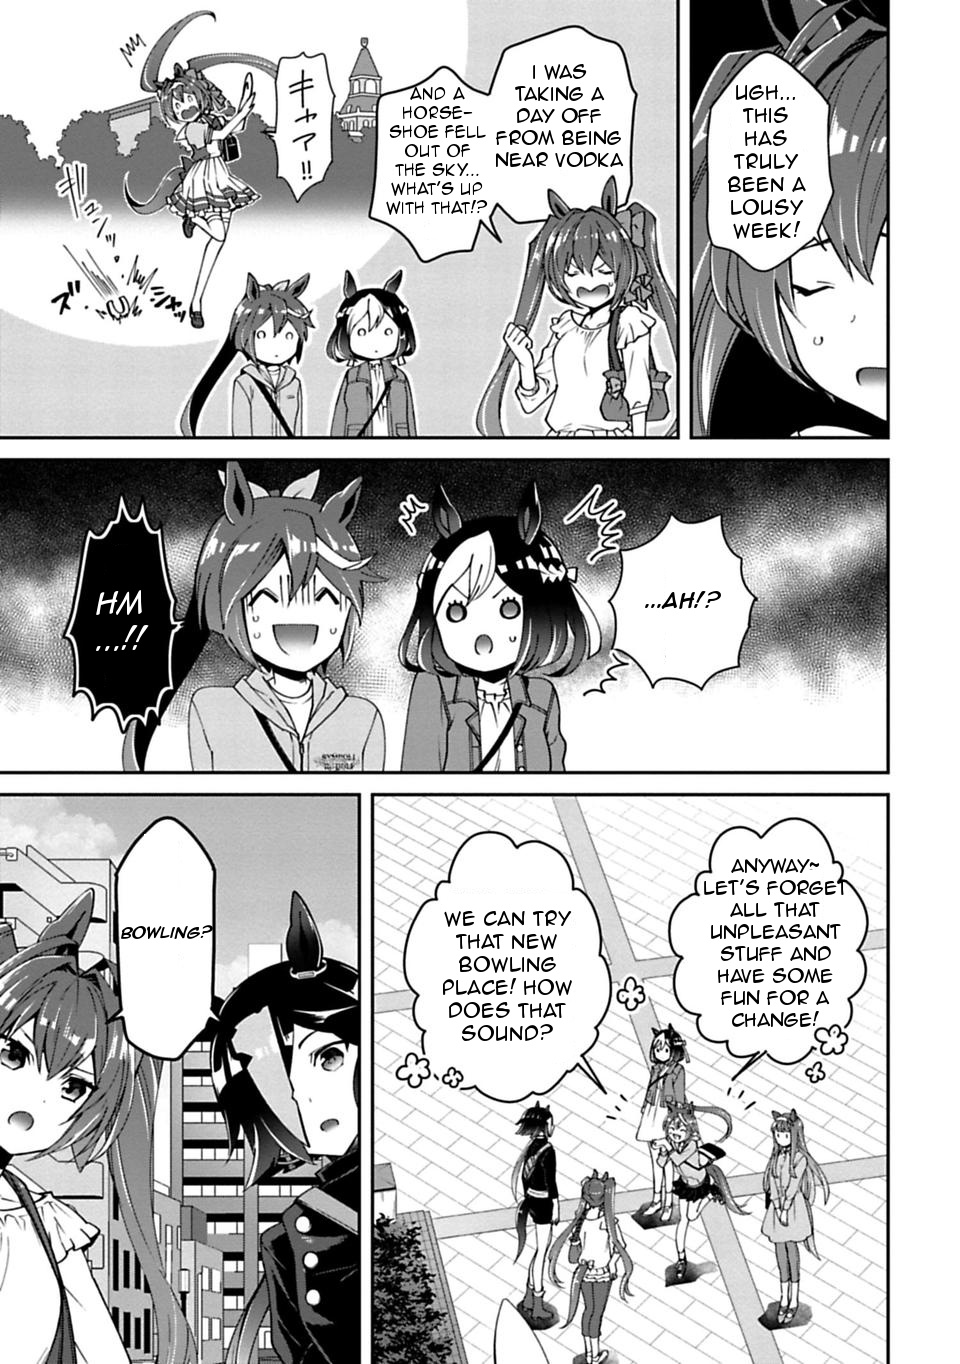 Starting Gate! Uma Musume Pretty Derby - Page 3